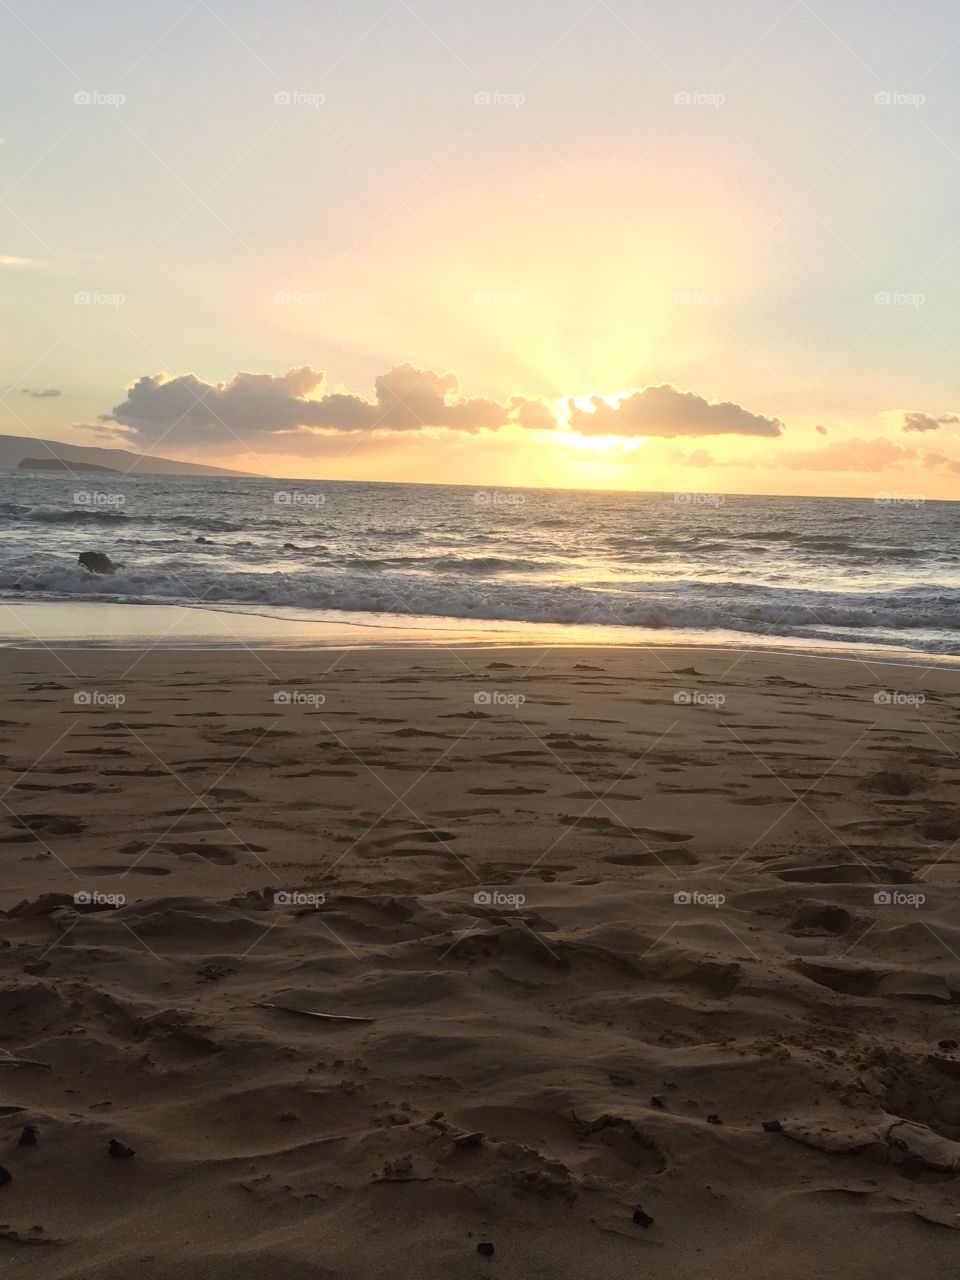 Sunset, Beach, Water, Sea, Sand